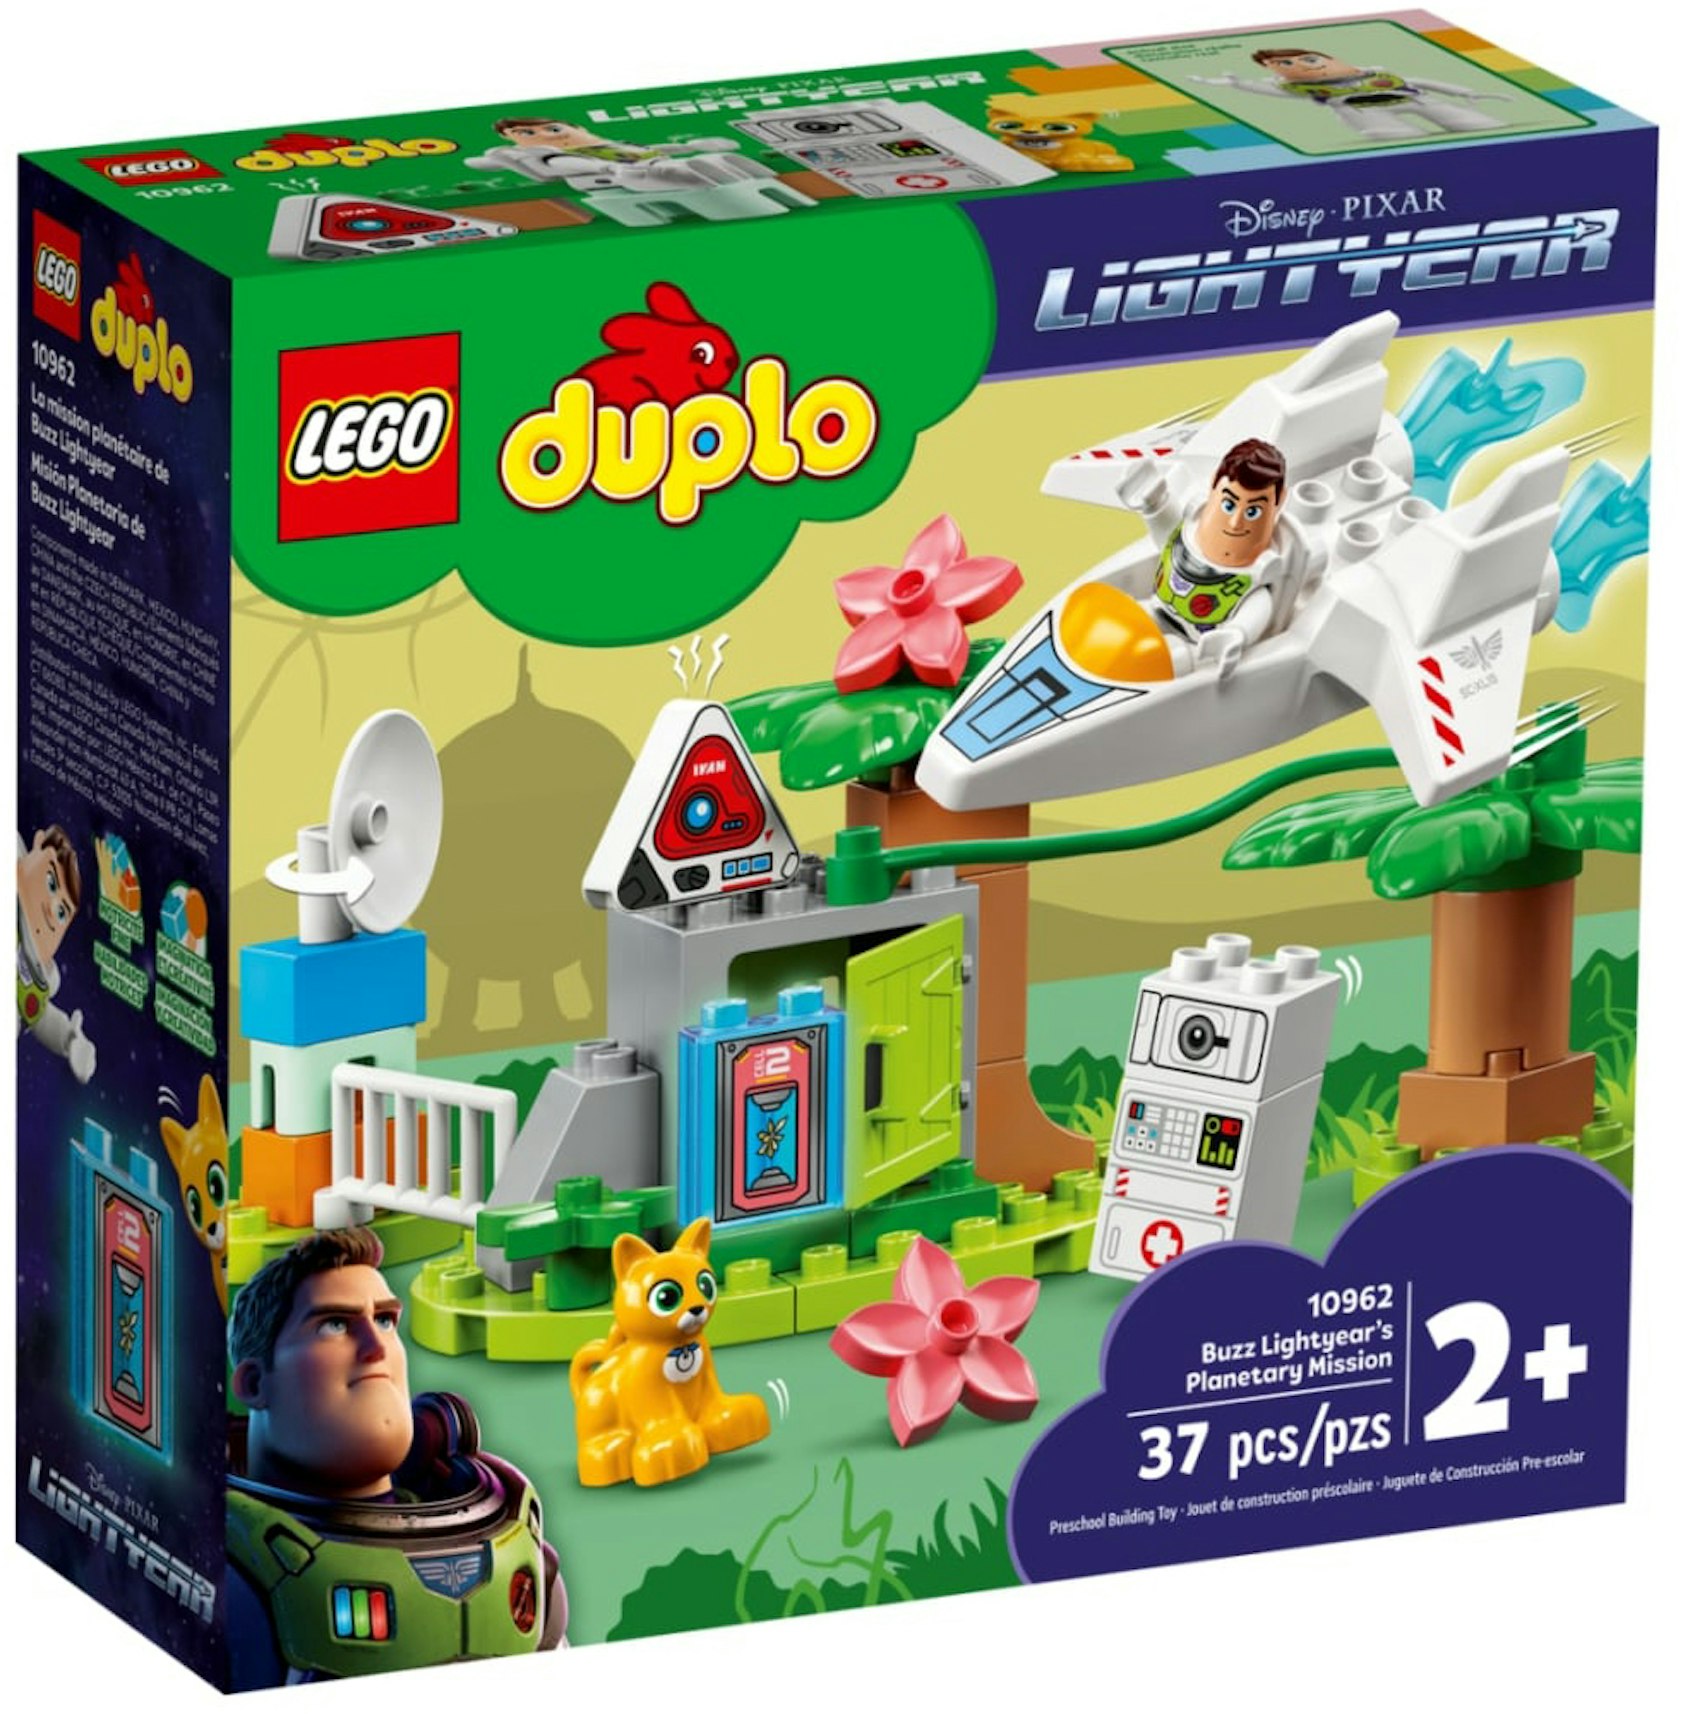 Junior let gidsel LEGO Duplo Disney Lightyear Buzz Lightyear's Planetary Mission Set 10962 -  US